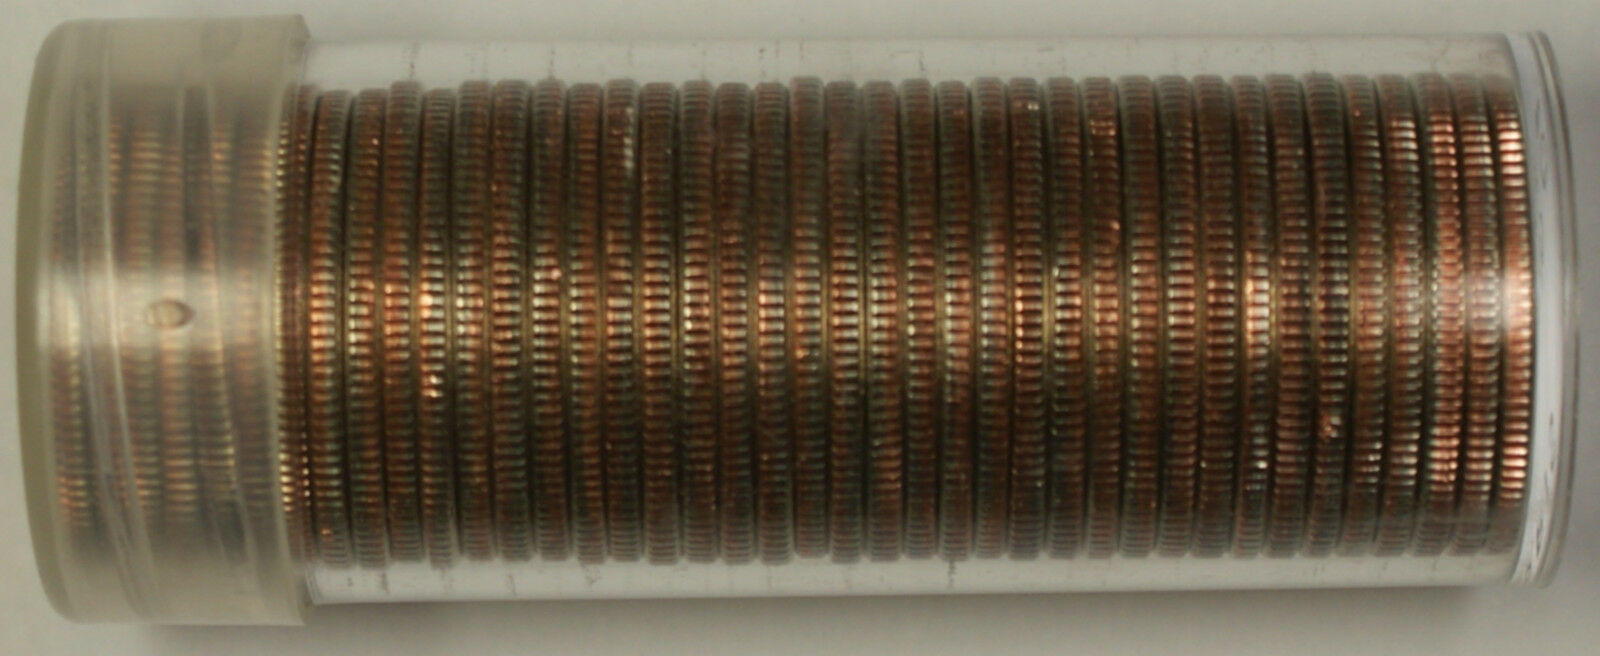 2003 P Arkansas State Quarter BU Roll- 40 Coins